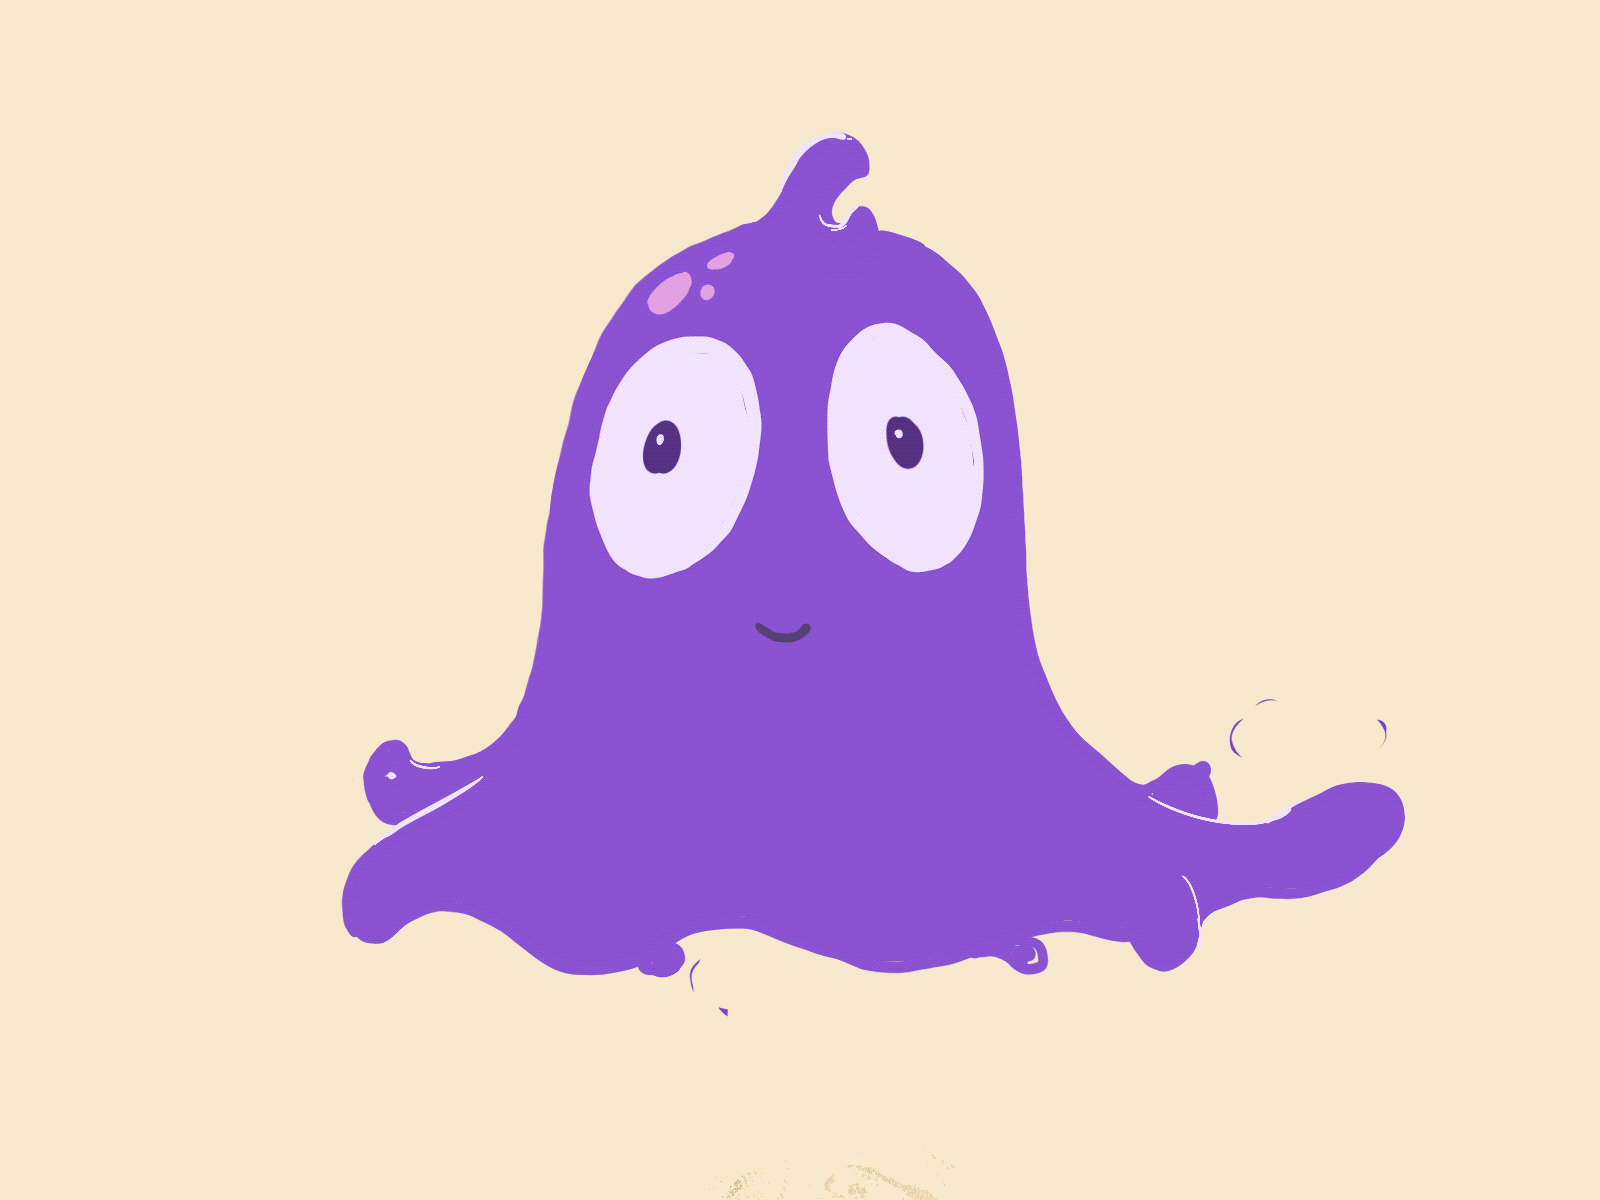 Purple monster